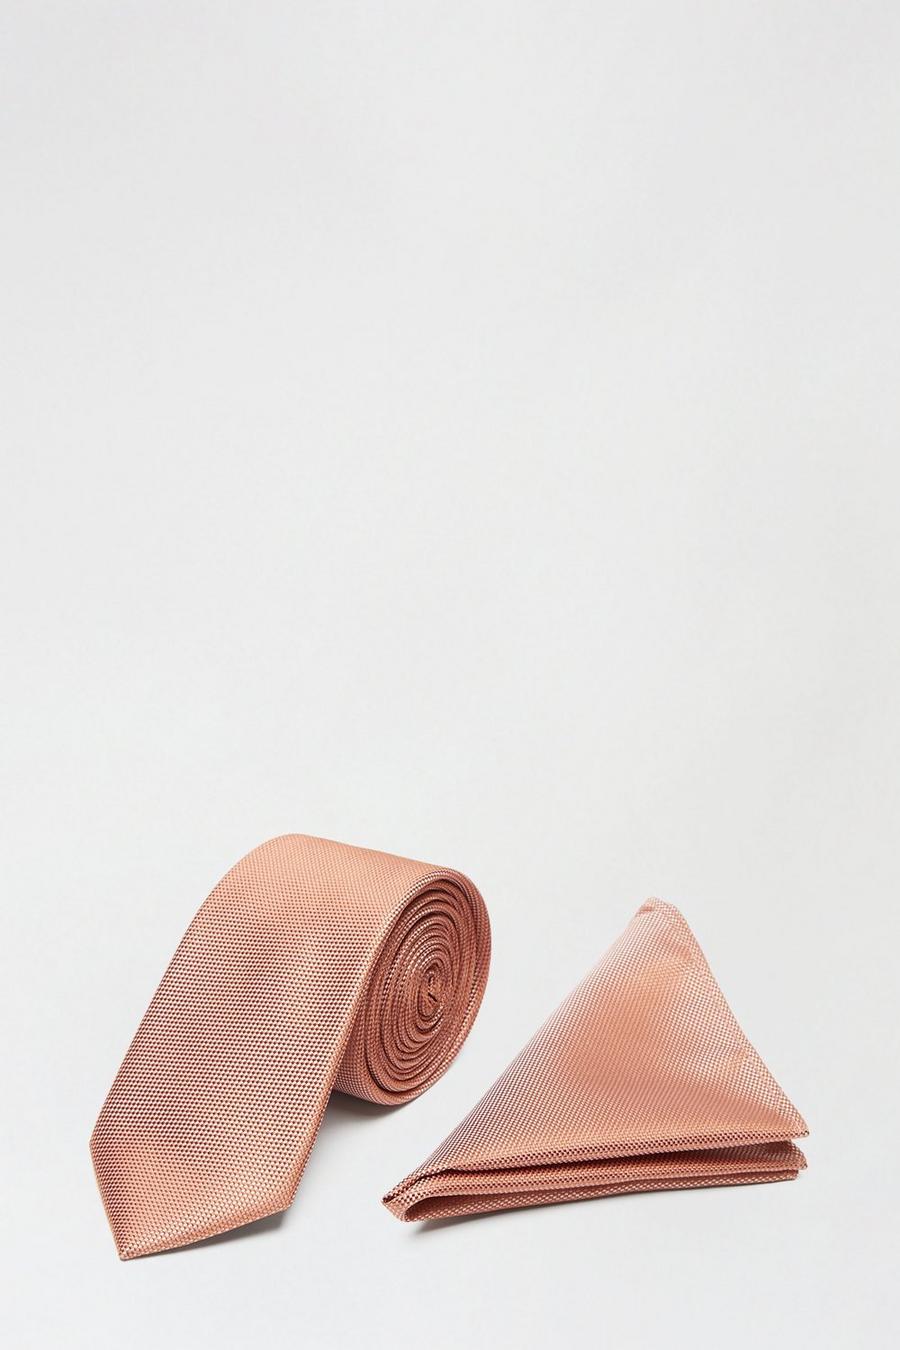 Slim Salmon Pink Texture Tie And Pocket Square Set